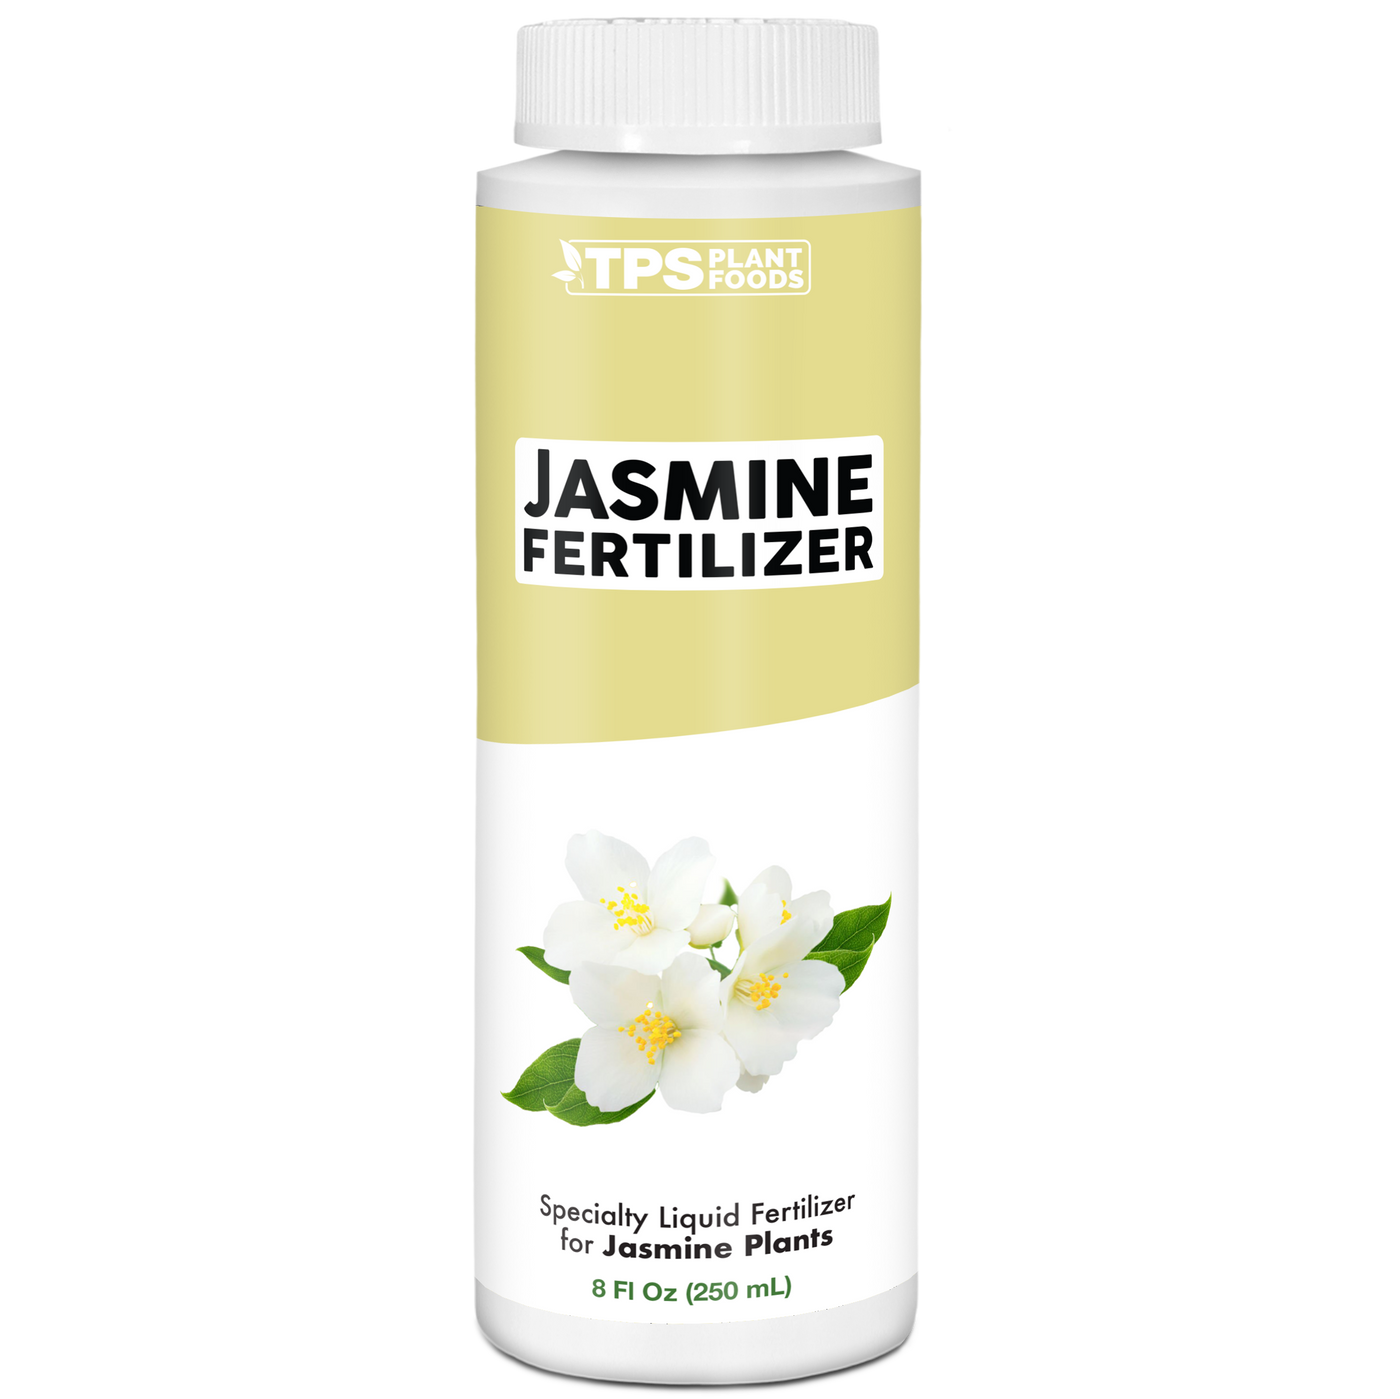 Jasmine Fertilizer